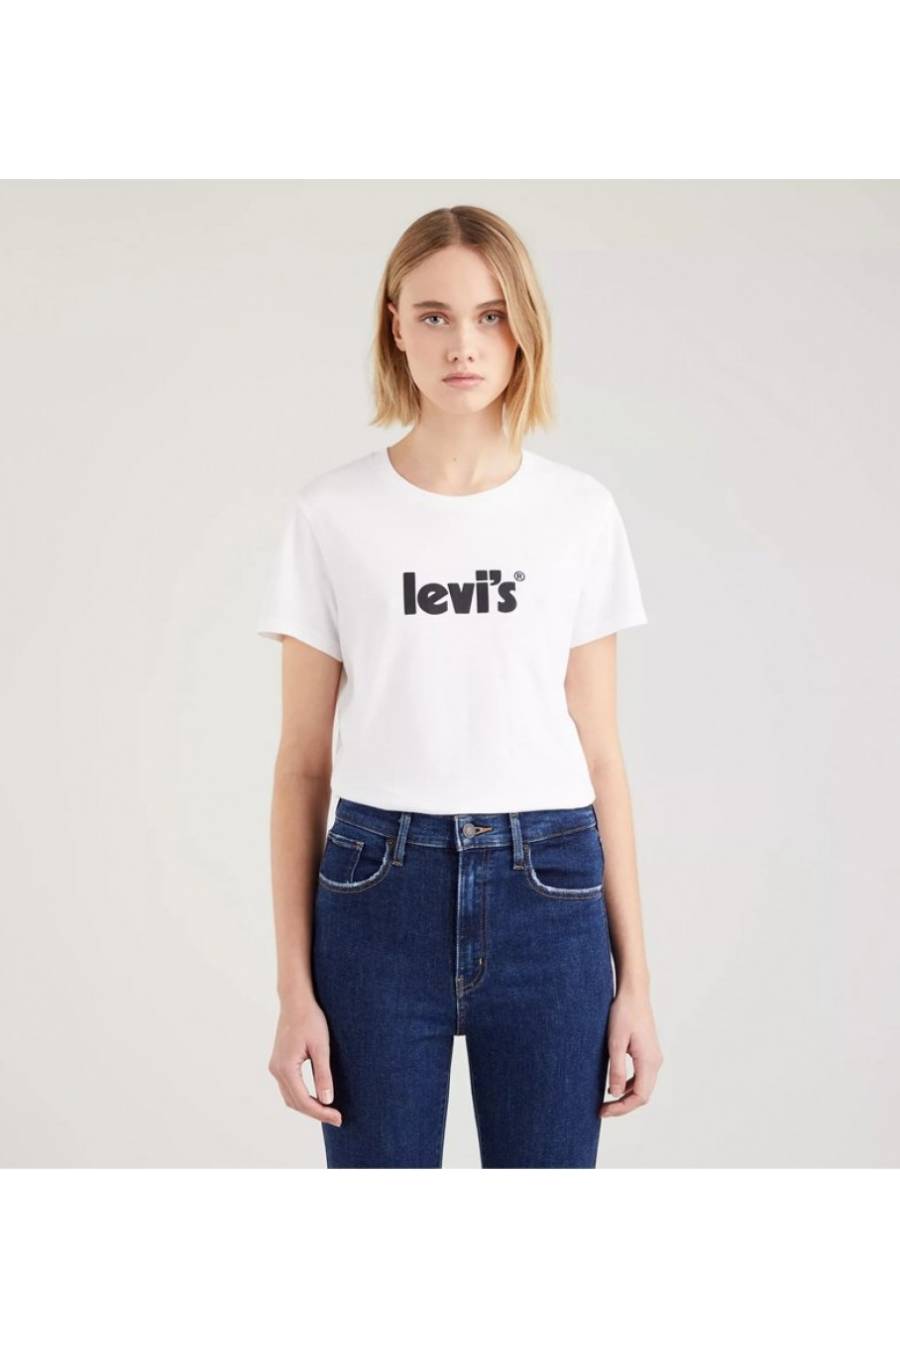 Camiseta Levi's The Perfect Tee Seasonal 17369-1755